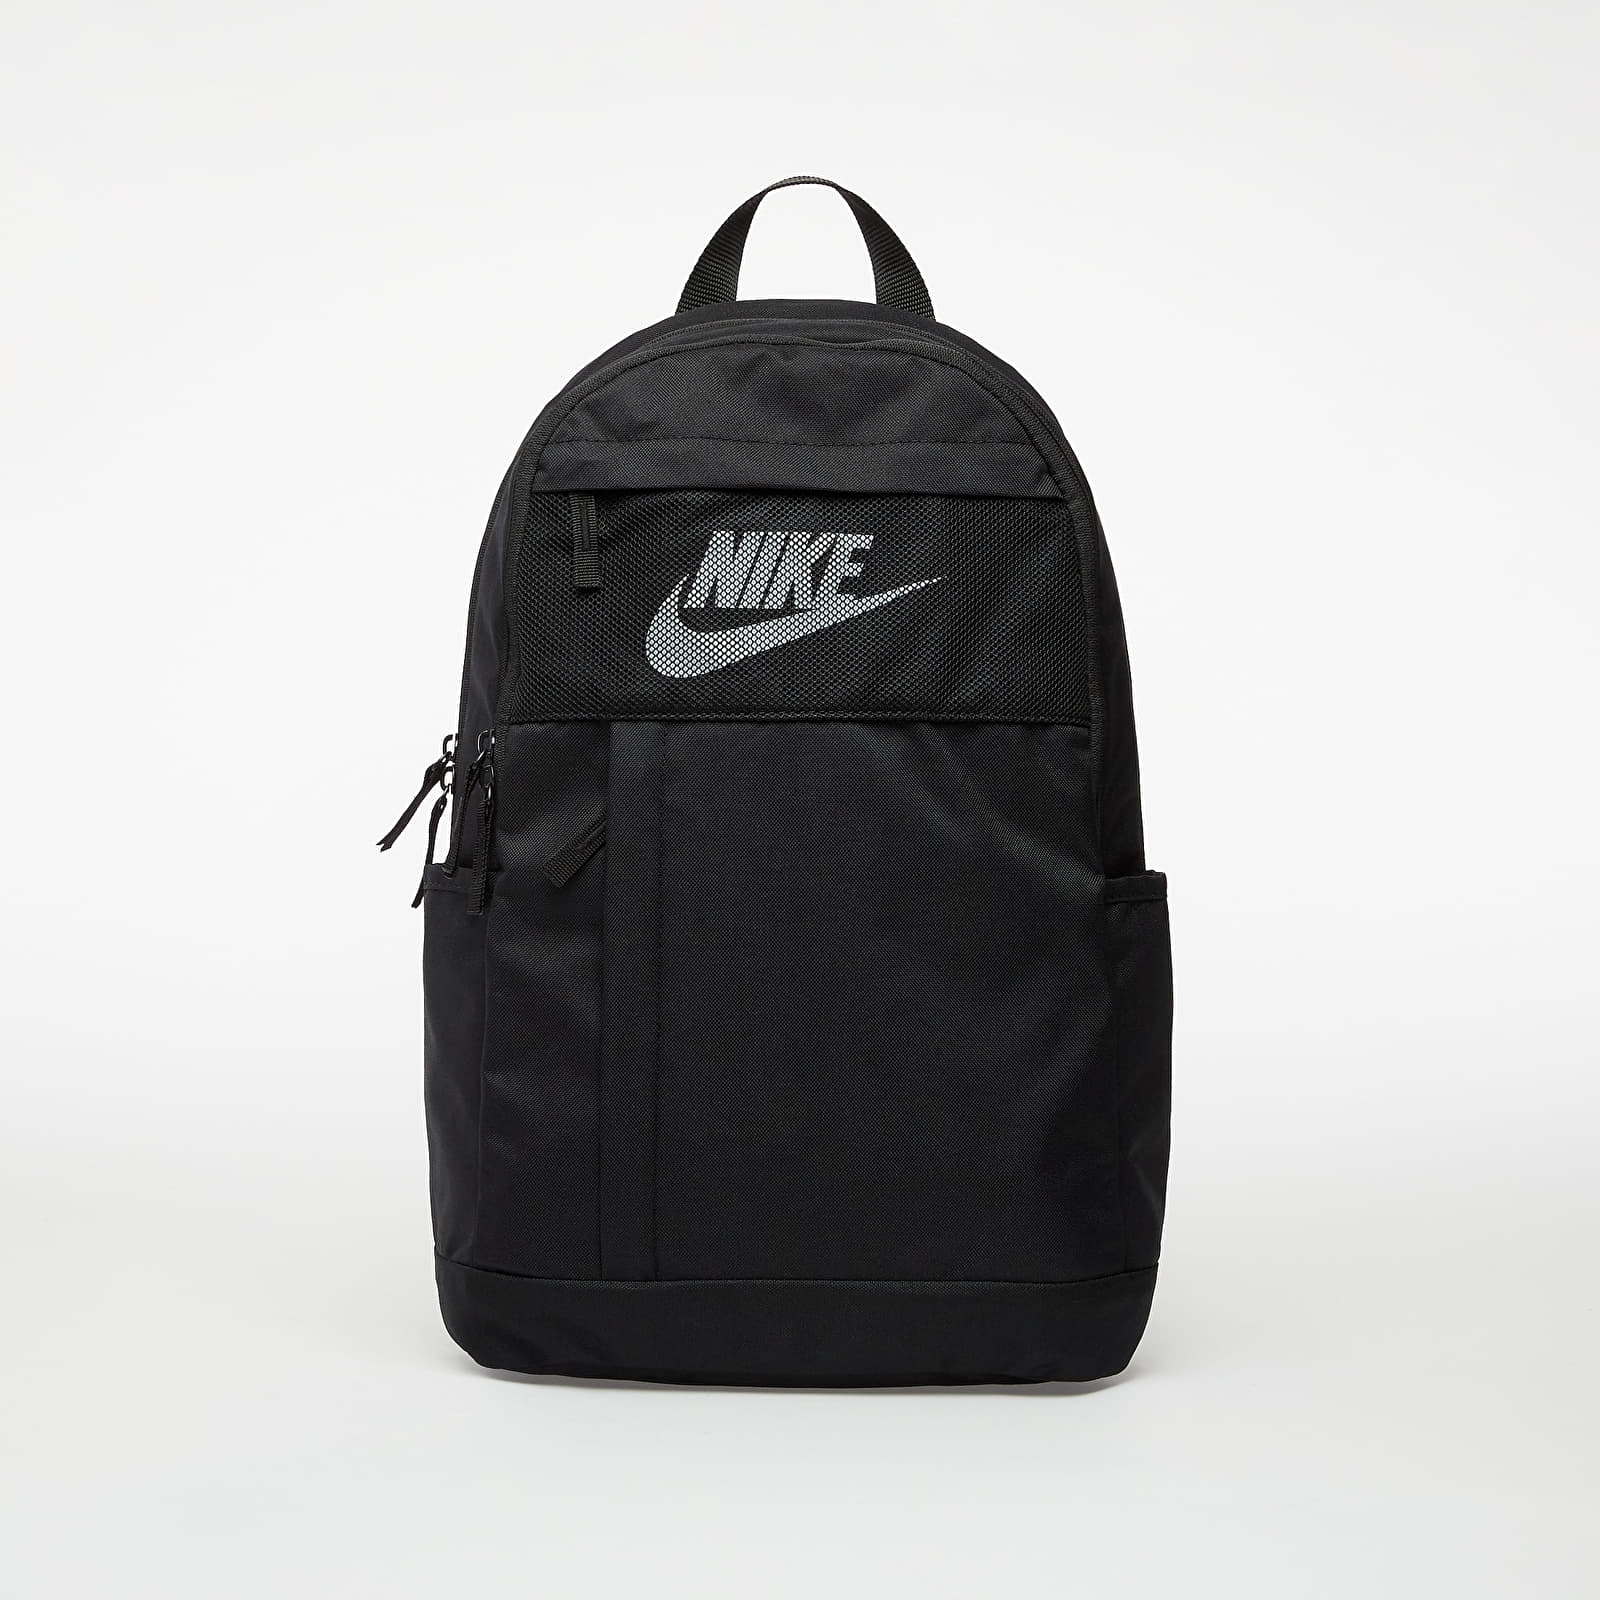 Раници Nike Elemental LBR Backpack Black 304450